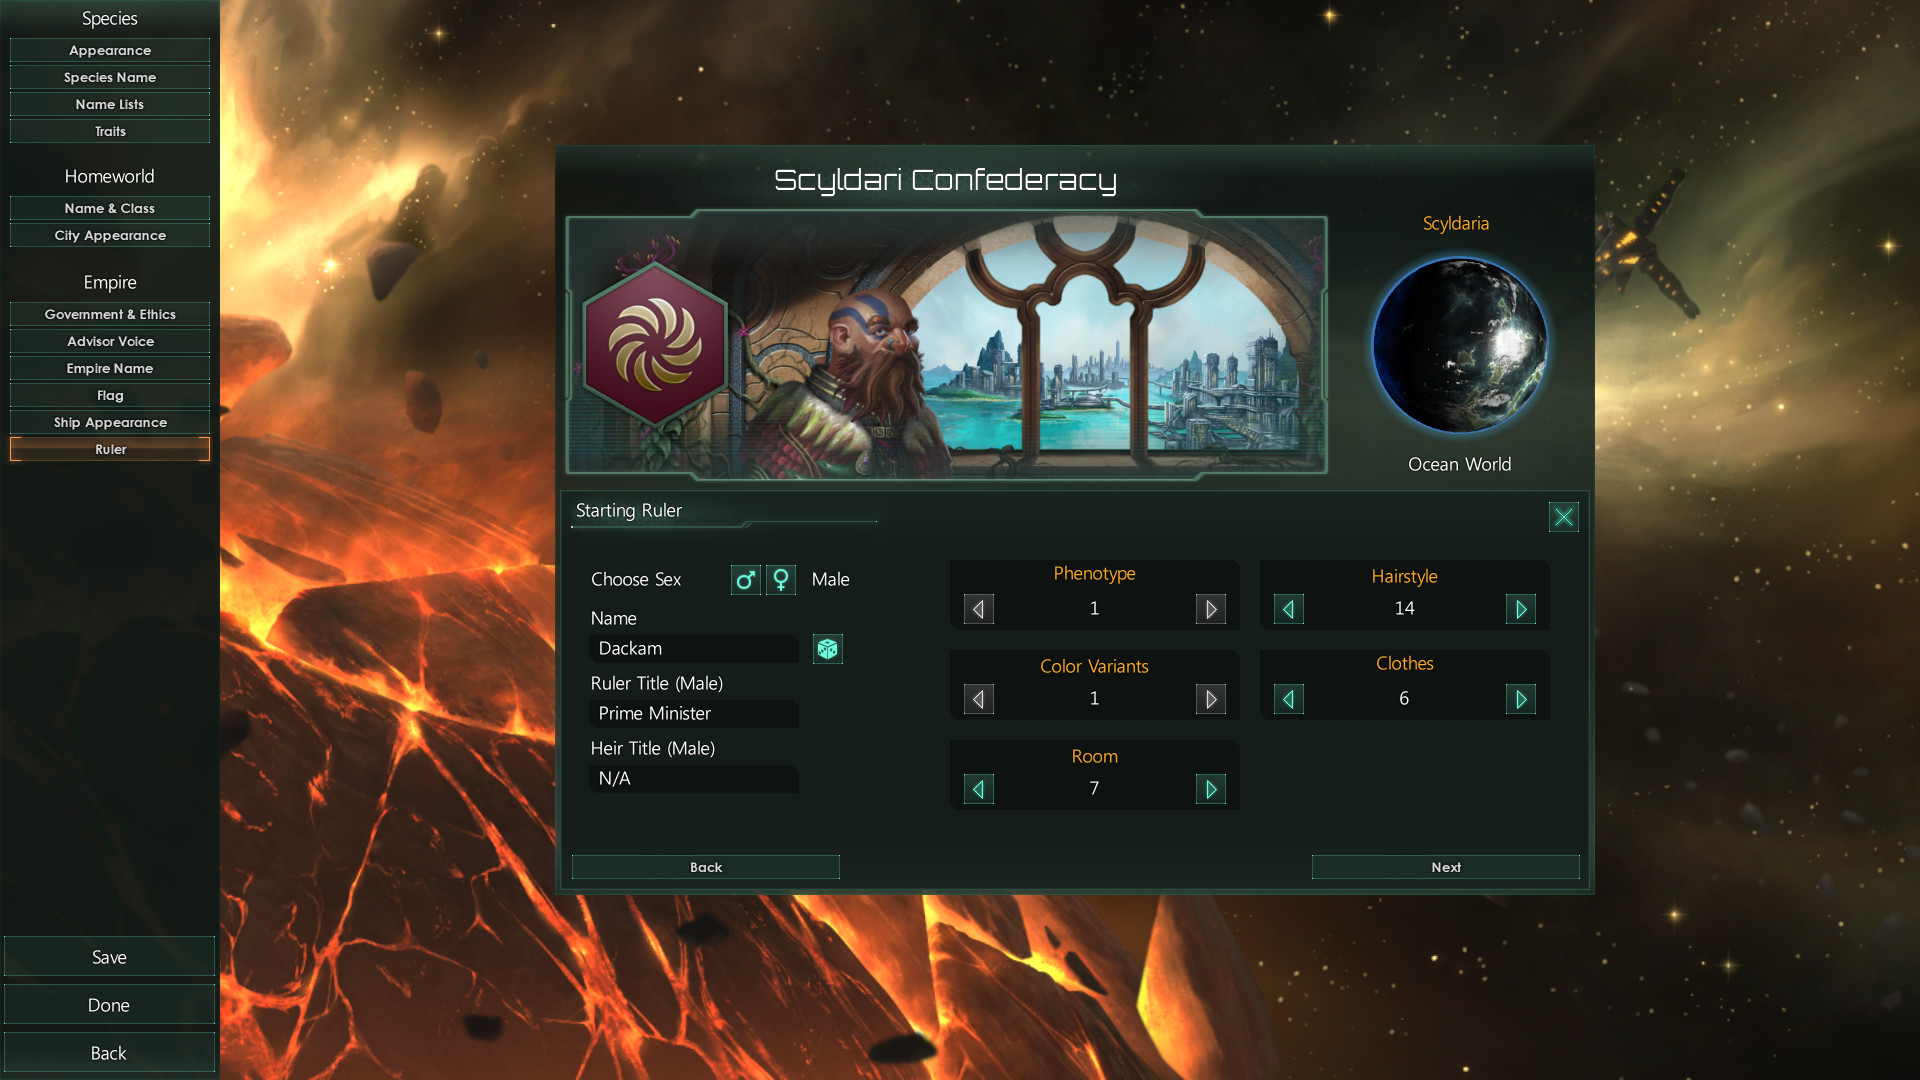 Stellaris: Humanoids Species Pack 💎 DLC STEAM GIFT RU